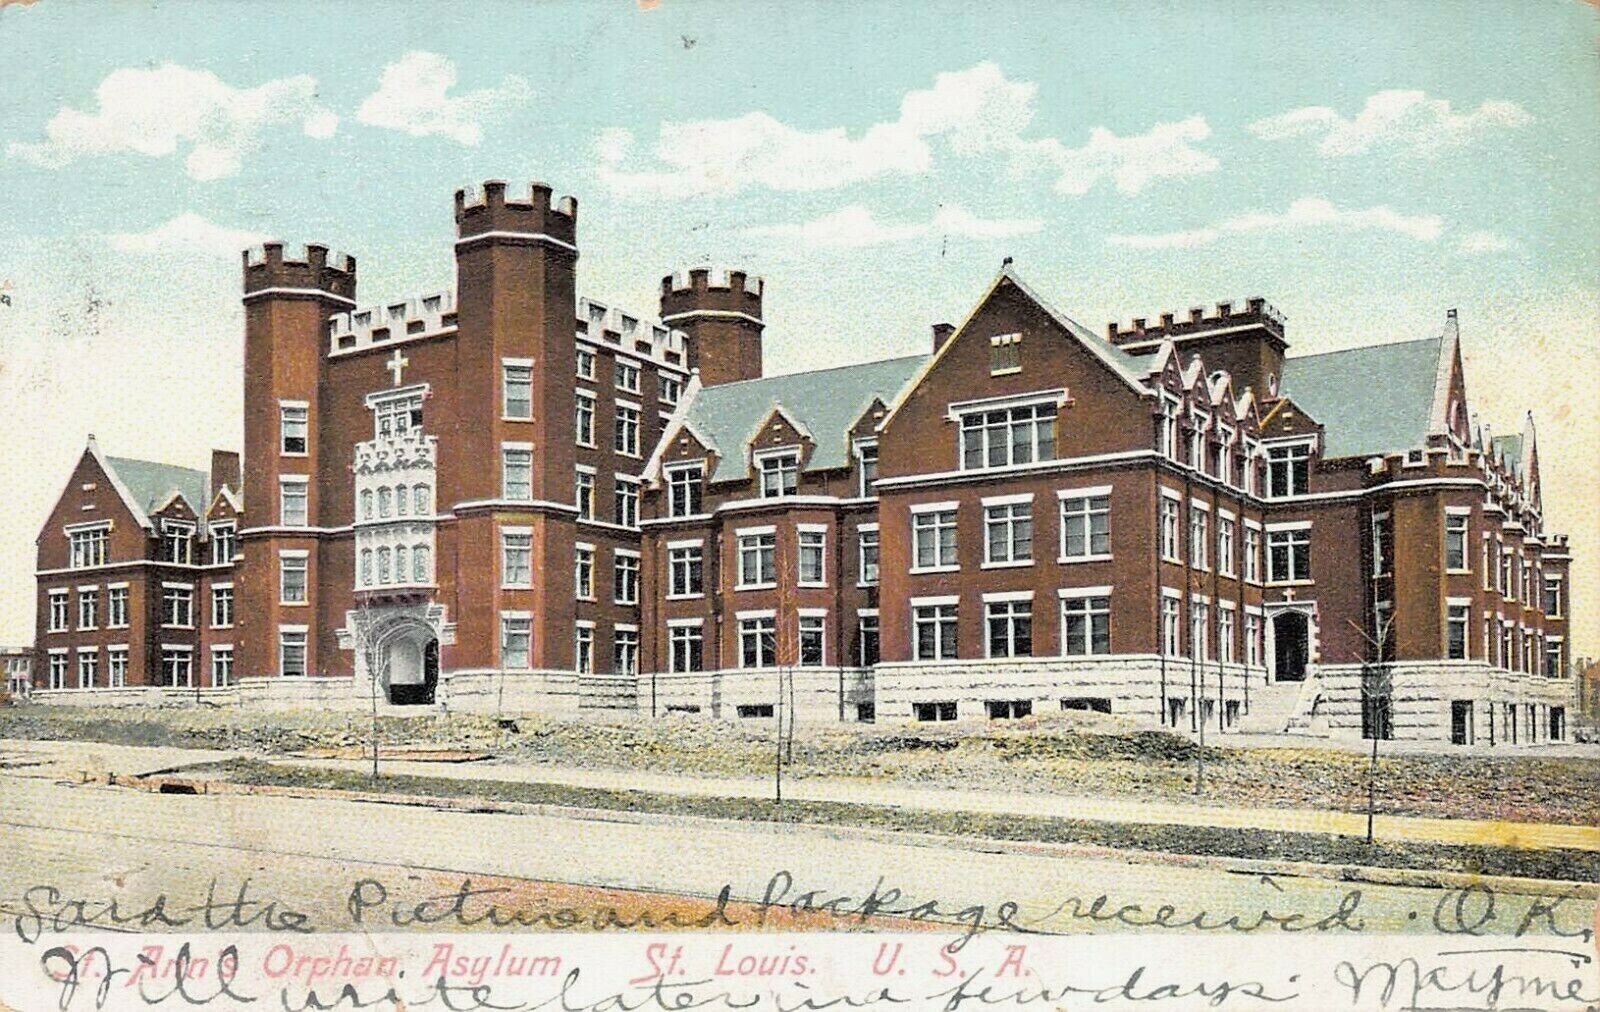 St. Ann's Orphan, Asylum, St. Louis, MO., Early Postcard, Used in 1908